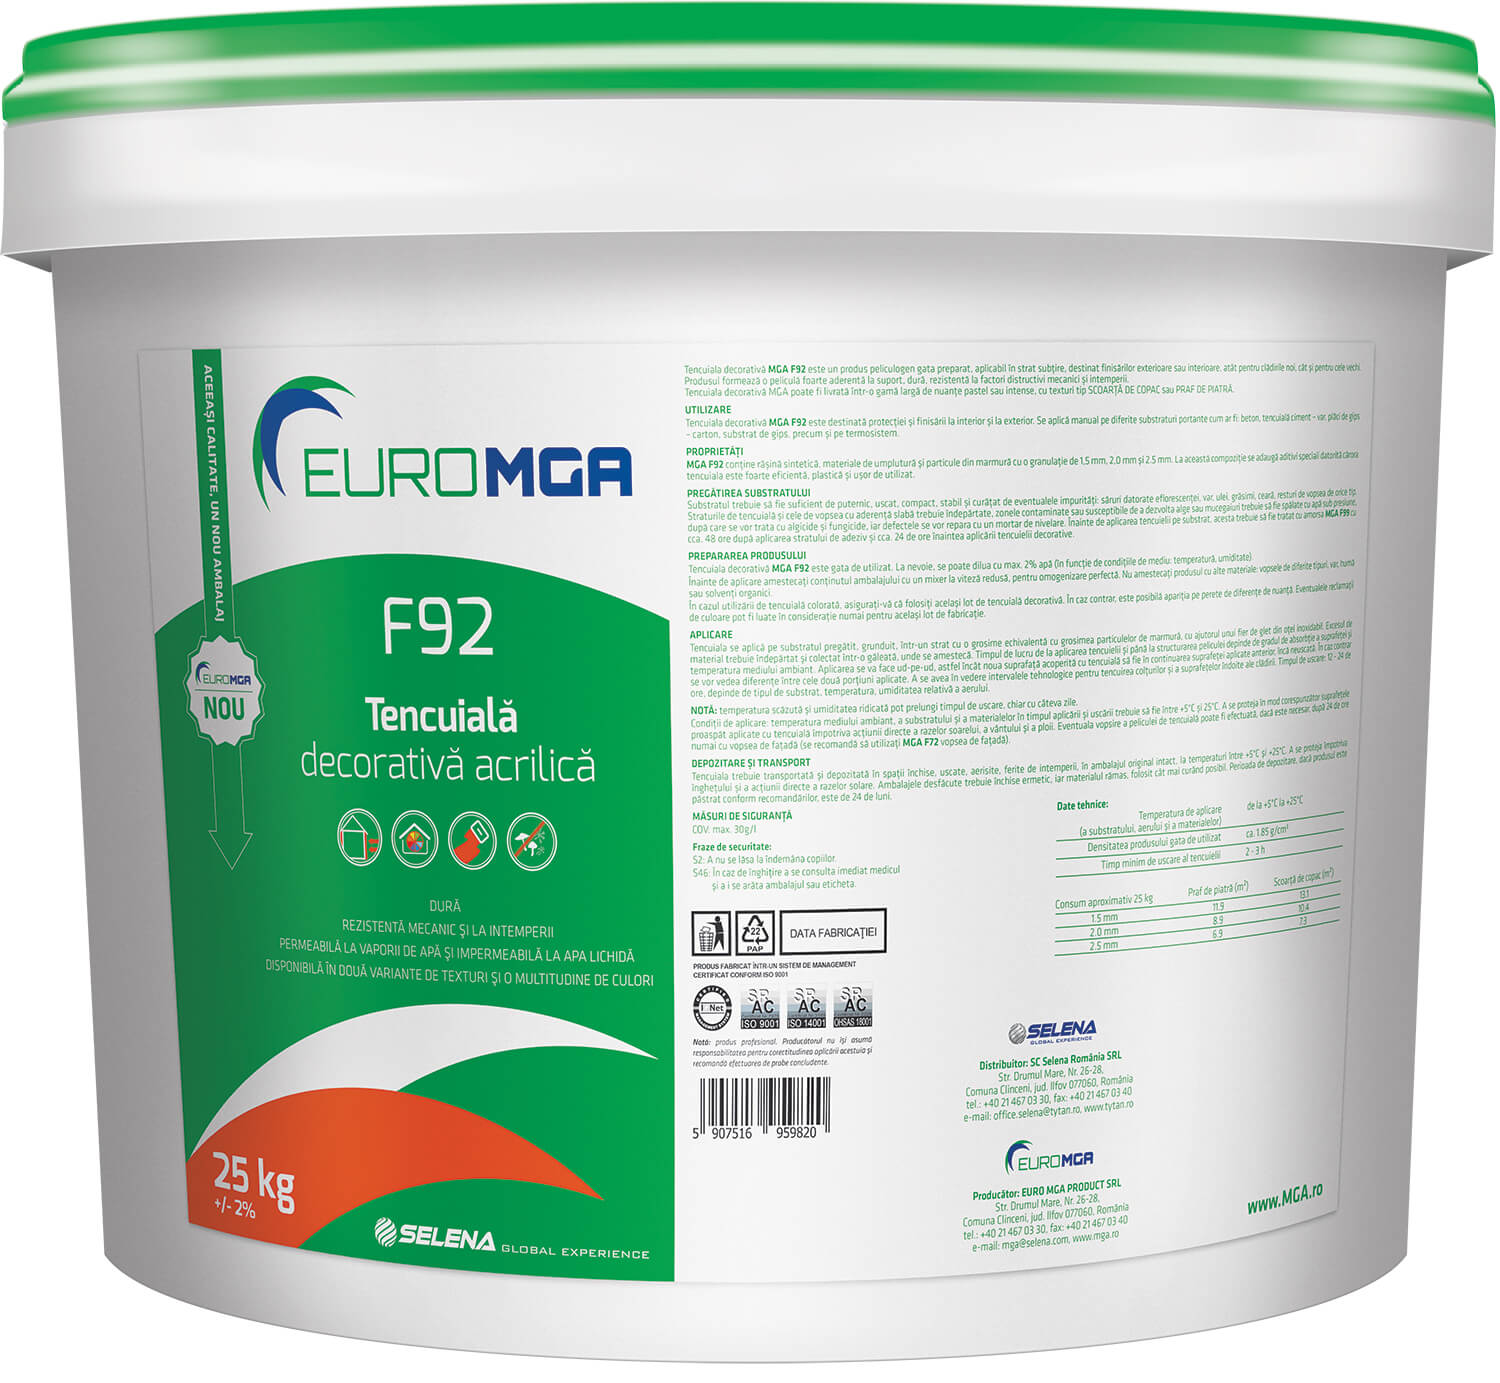 Decorative plasters - Decorative acrylic plaster F92 EuroMGA K25 25kg, https:maxbau.ro